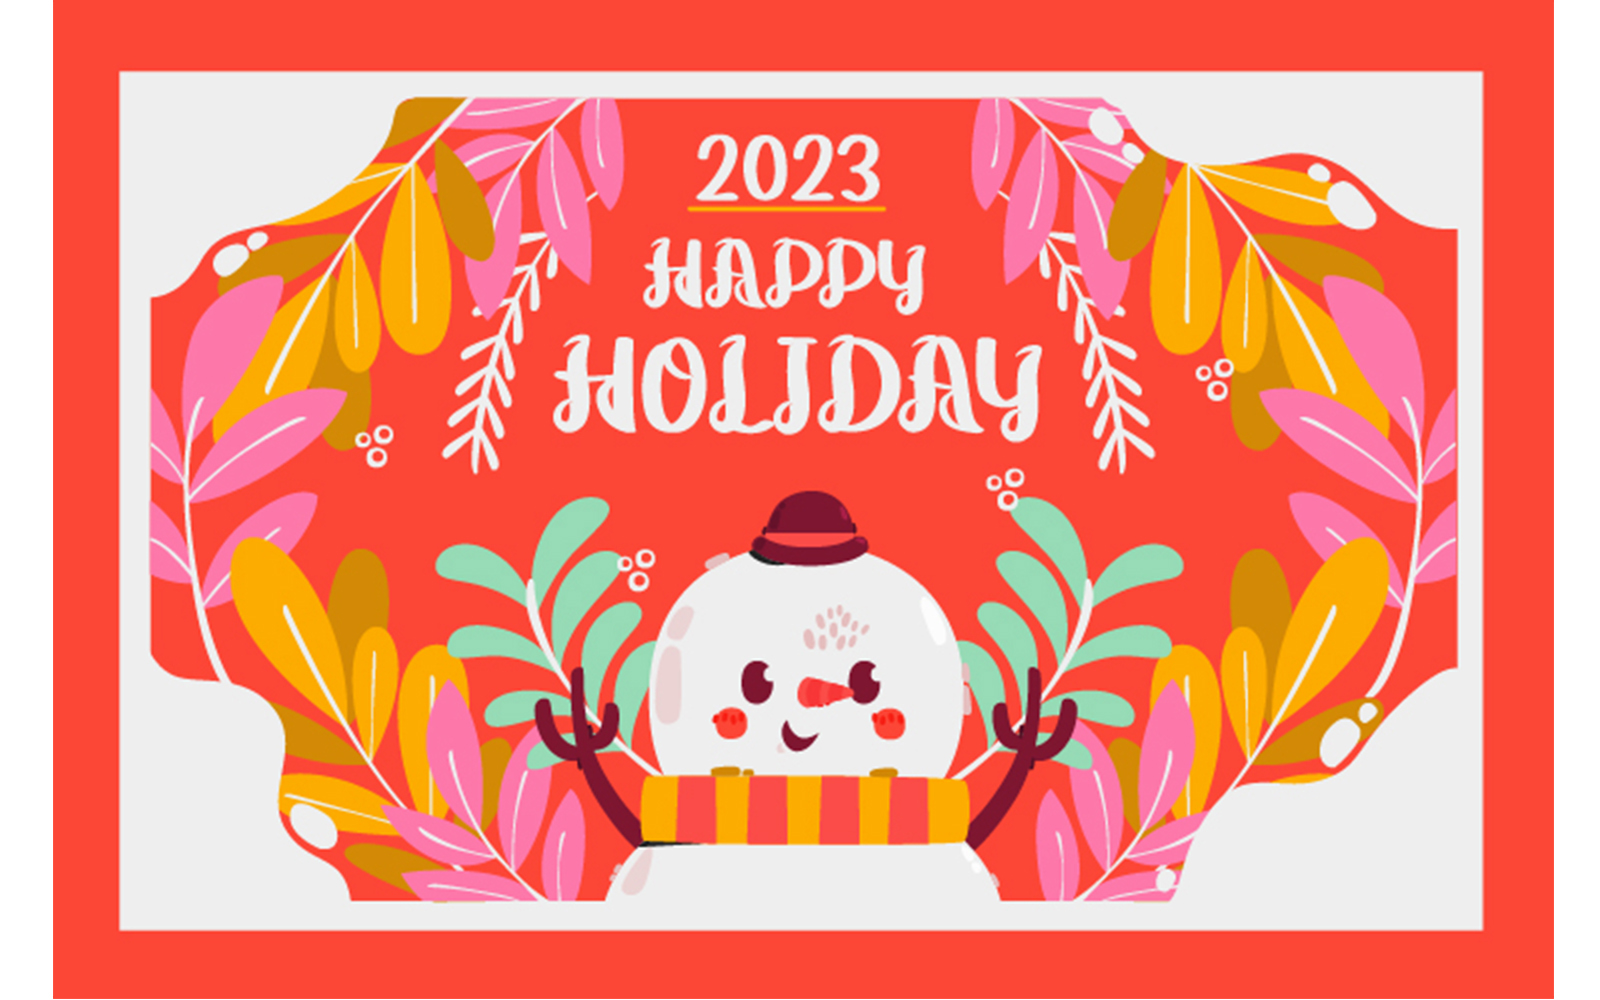 Happy Holiday 2023 Card Illustration